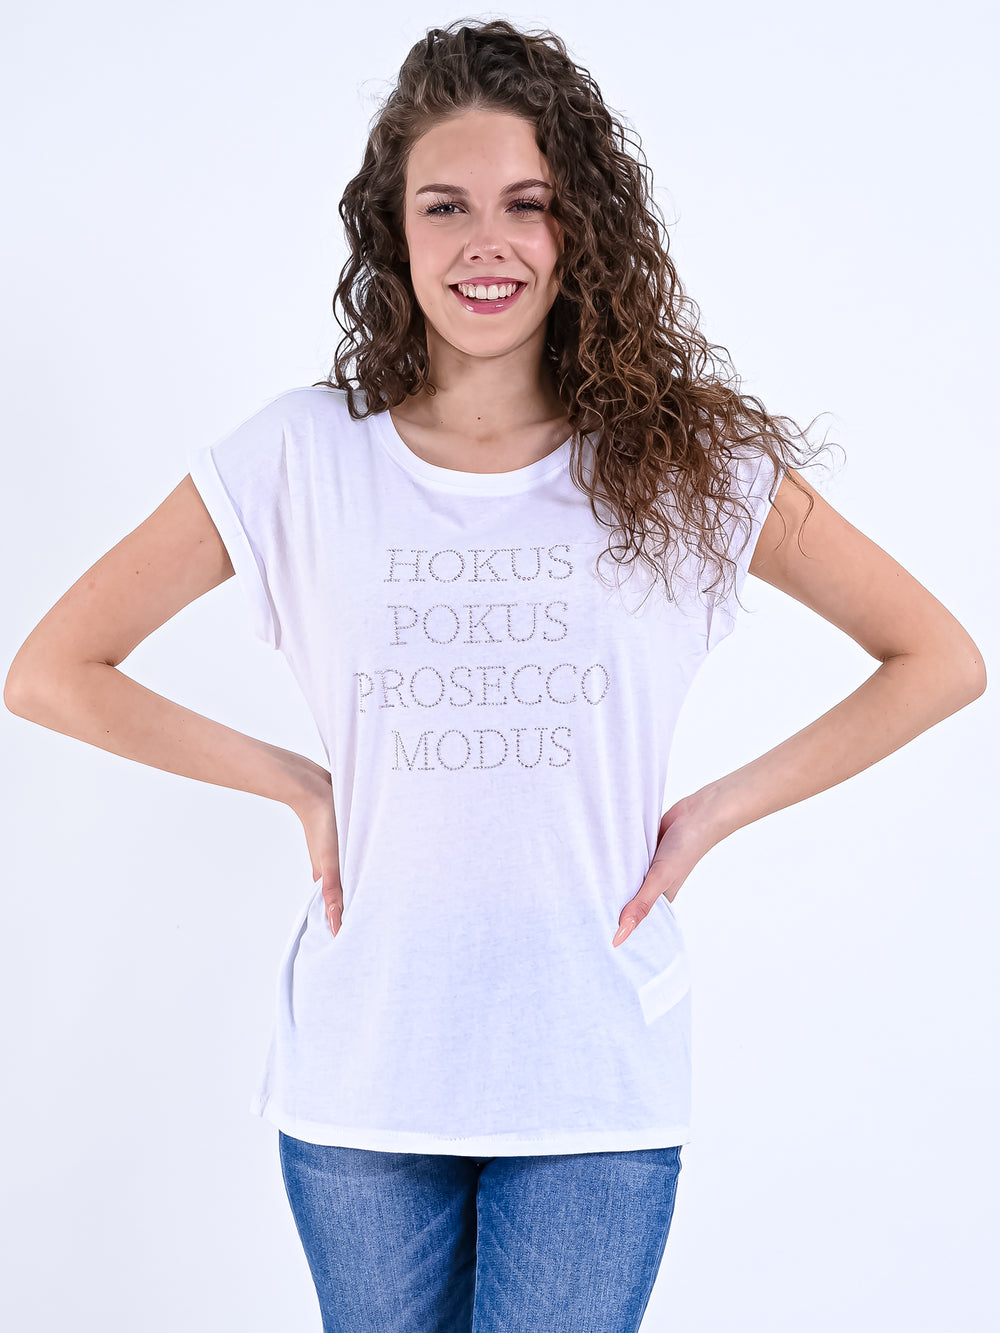 T-Shirt Studs "Hokus Pokus Prosecco Modus"